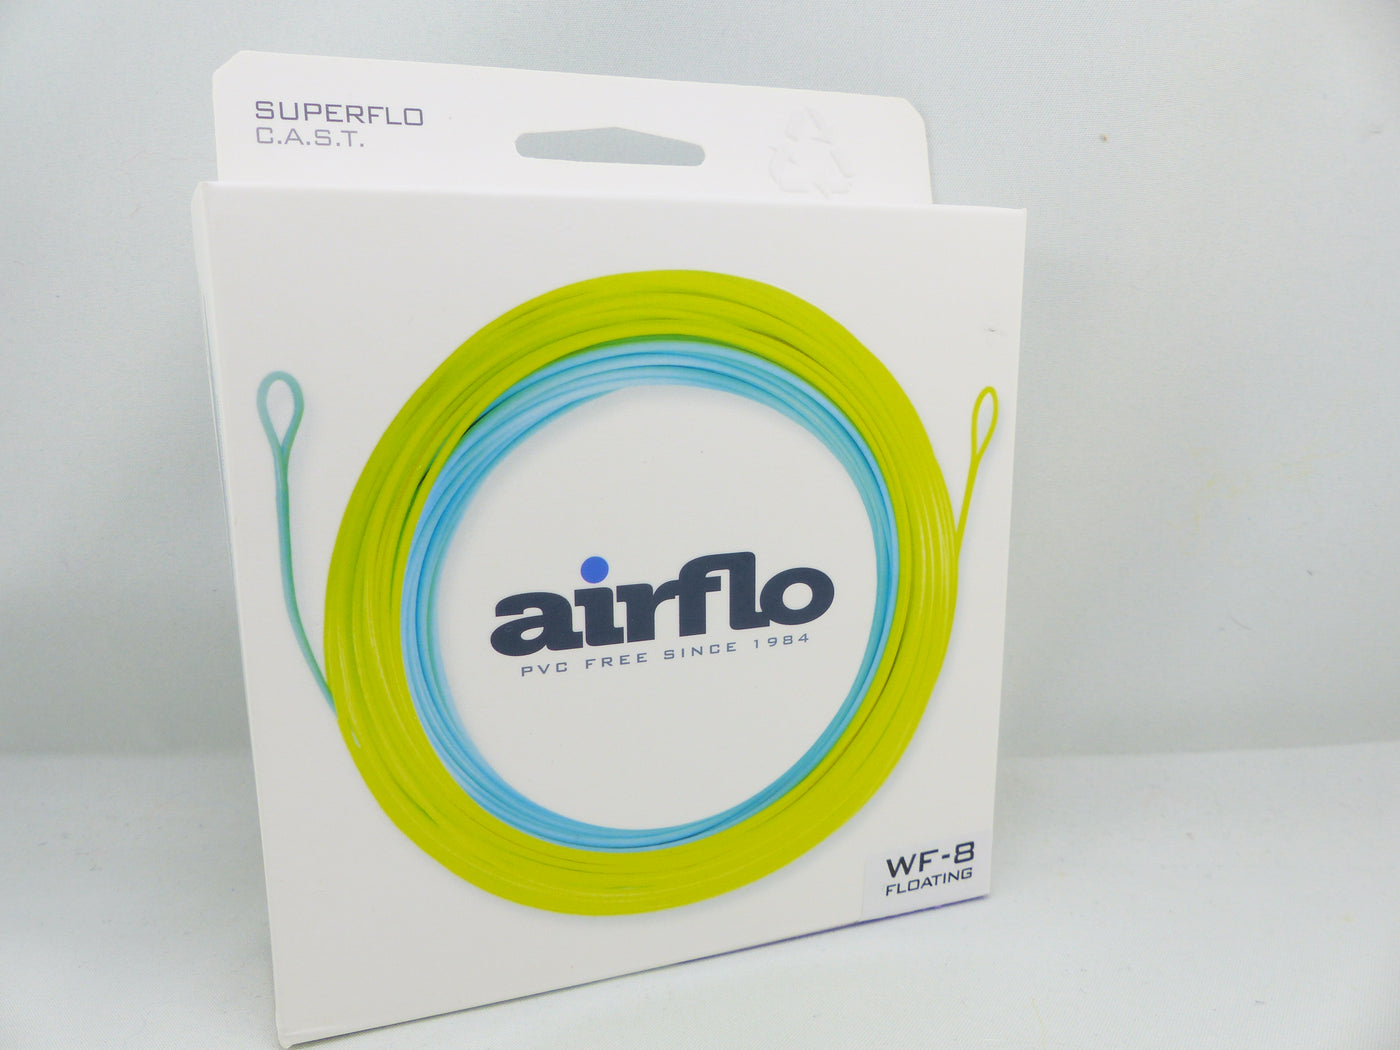 Airflo superflo cast